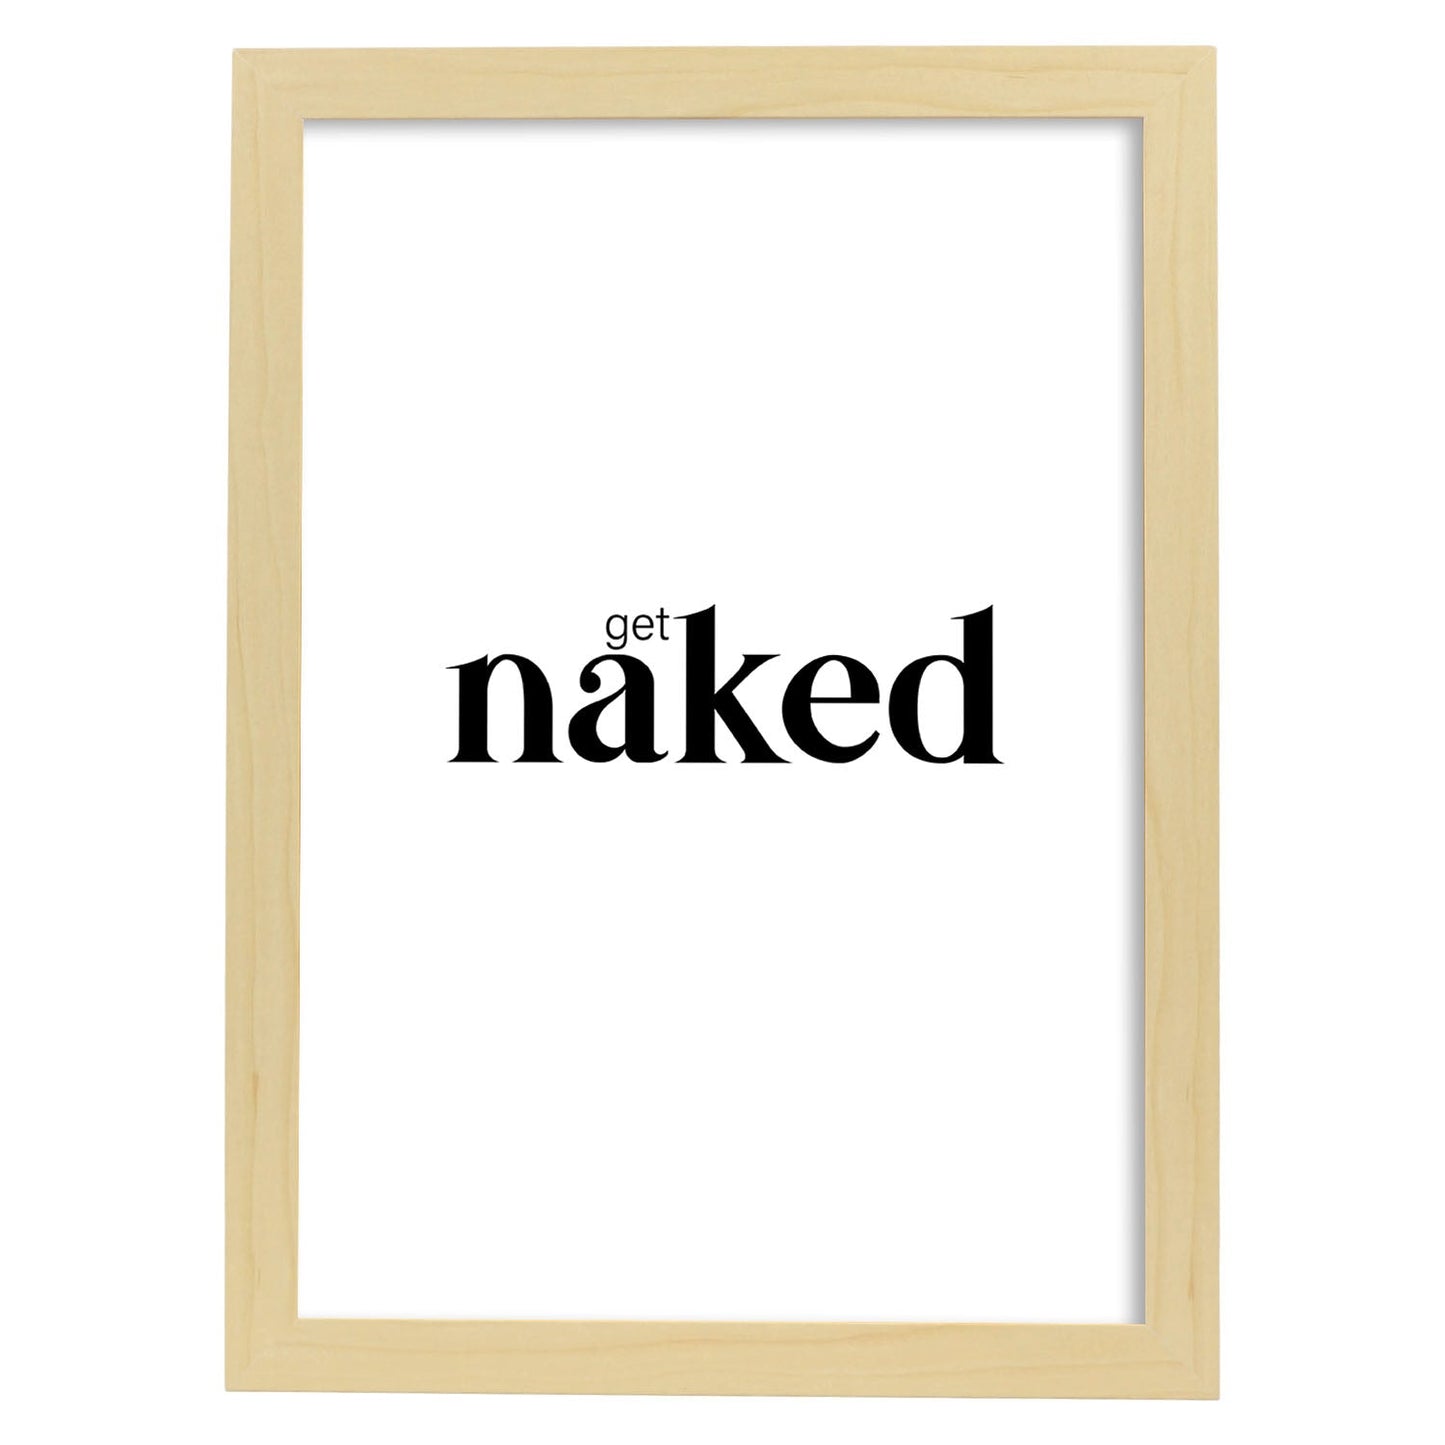 Lamina artistica decorativa con ilustración de get naked estilo Mensaje inspiracional-Artwork-Nacnic-A3-Marco Madera clara-Nacnic Estudio SL